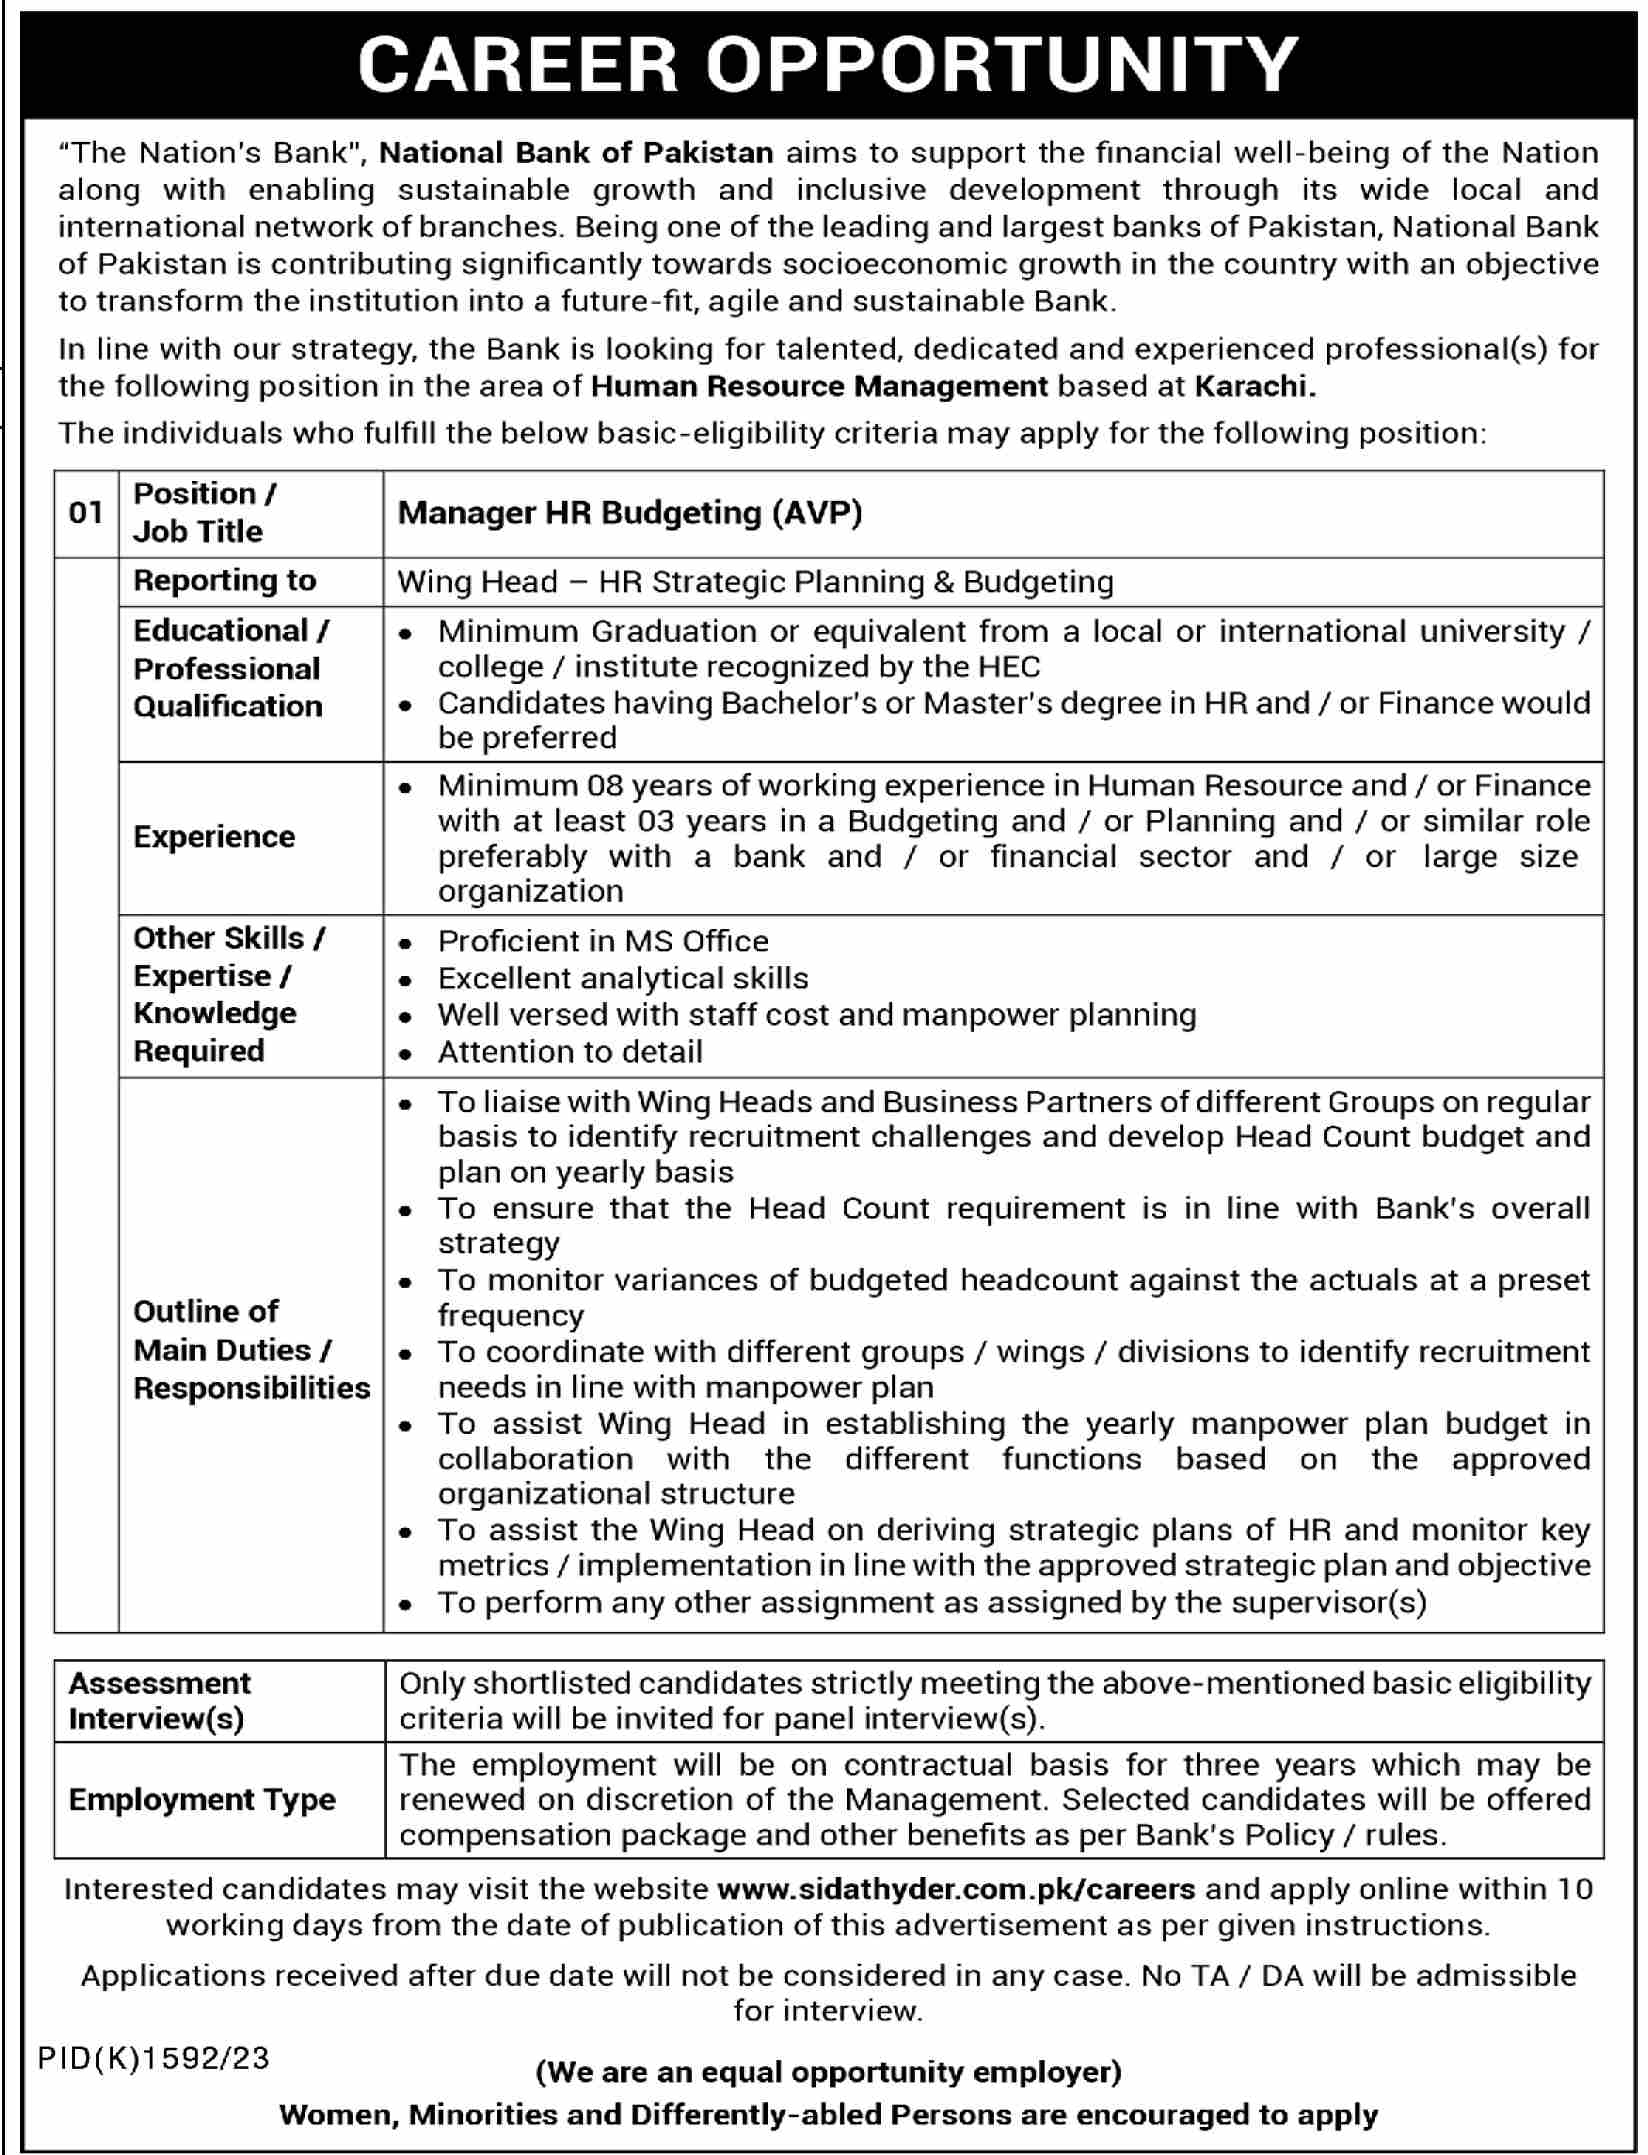 National Bank of Pakistan Human Resource Management Jobs in Karachi